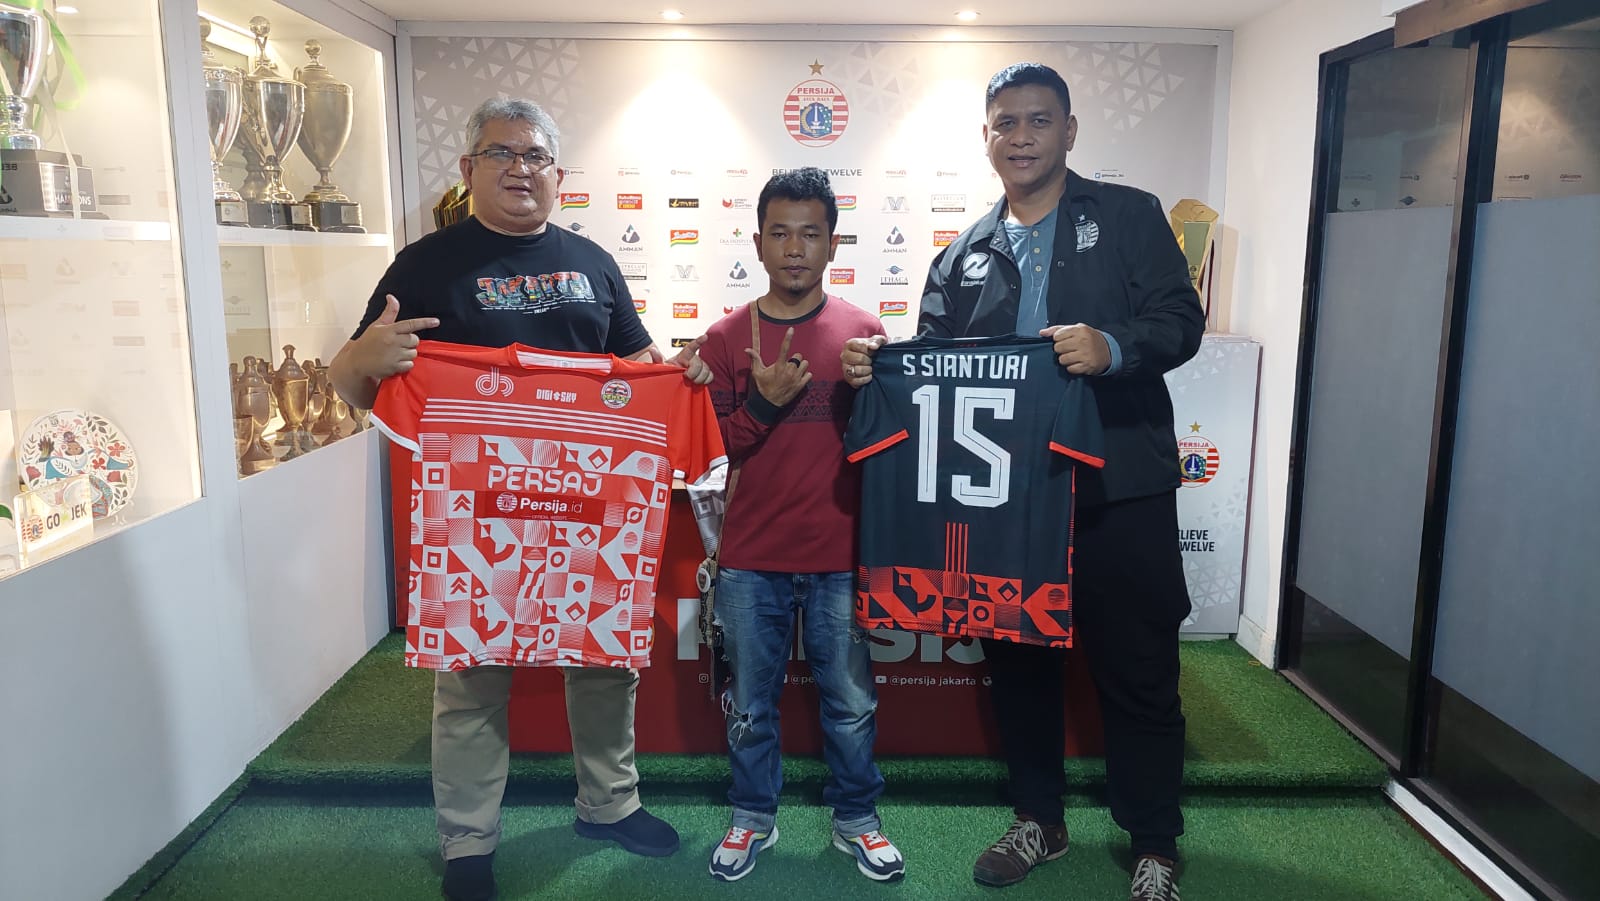 Ferry Indrasjarief, Manager Fans dan External Relations, dan Benhard Sitorus, Chief Media dan Membership Engagement, melakukan serah terima jersey kepada pemain Persaj.